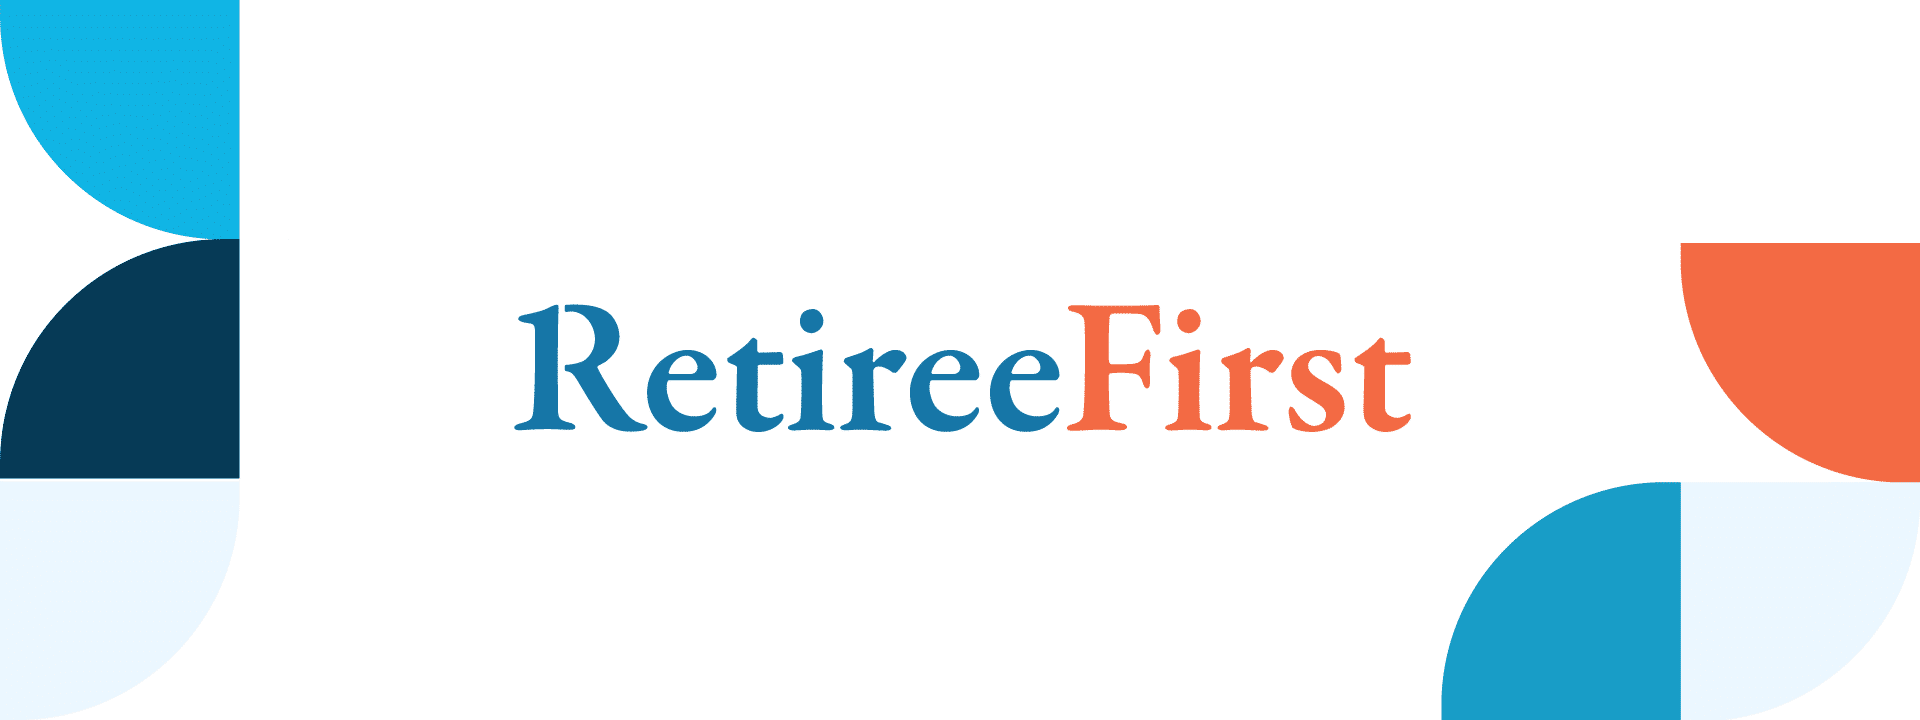 RetireeFirst Logo